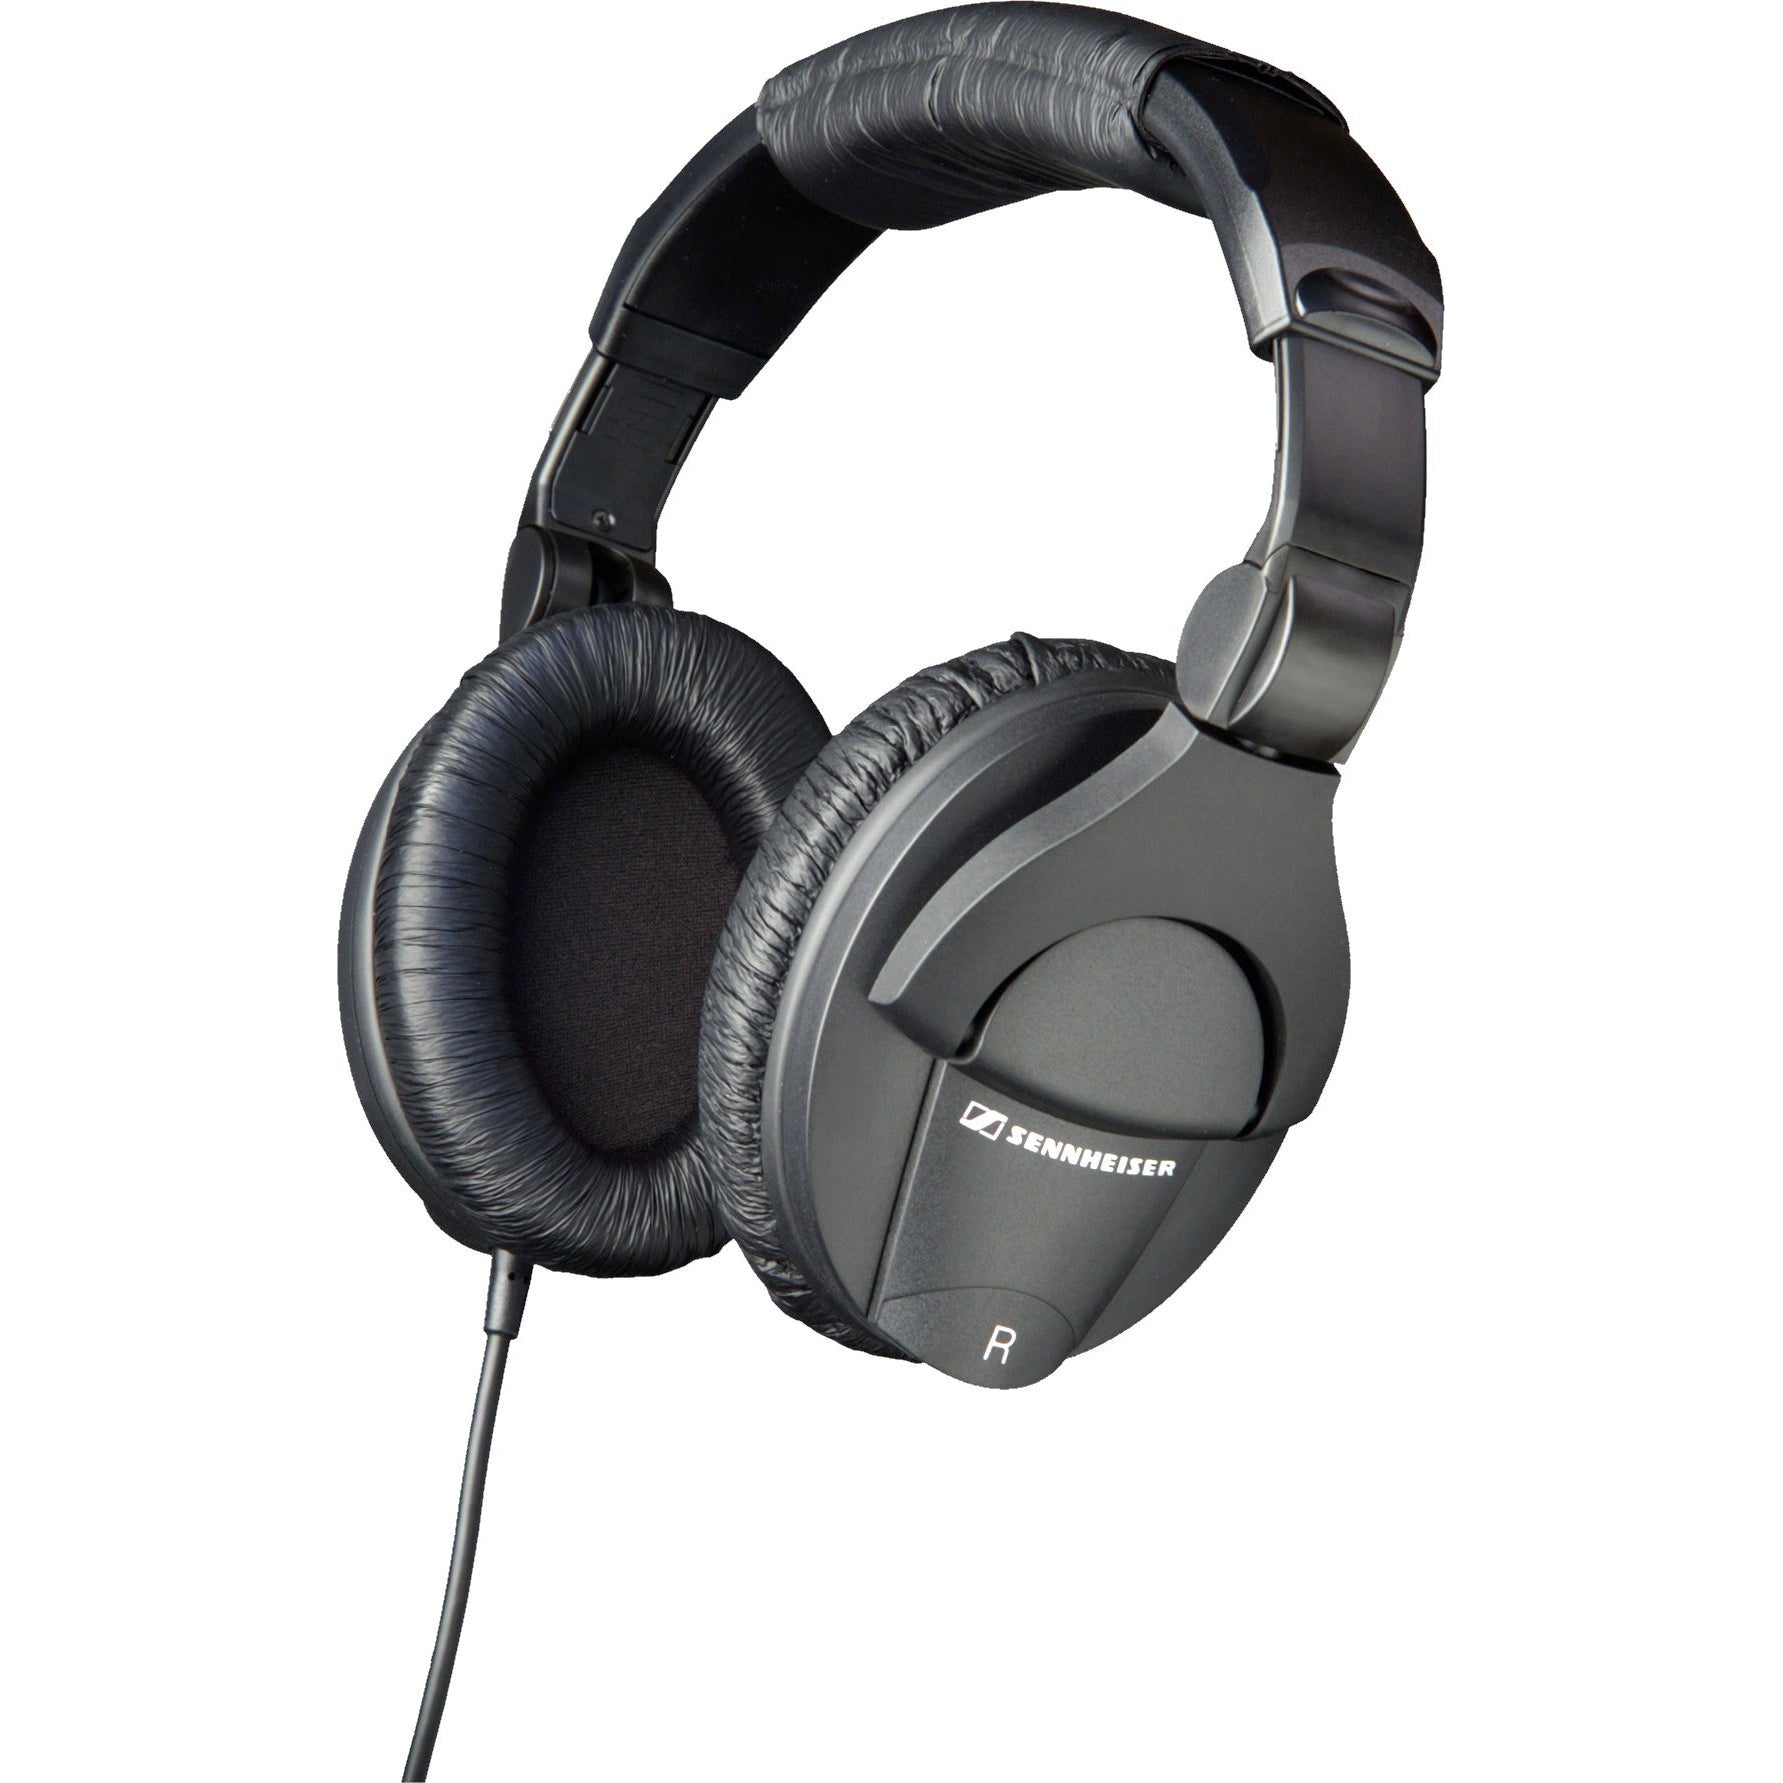 Sennheiser HD 280 Pro Headphones